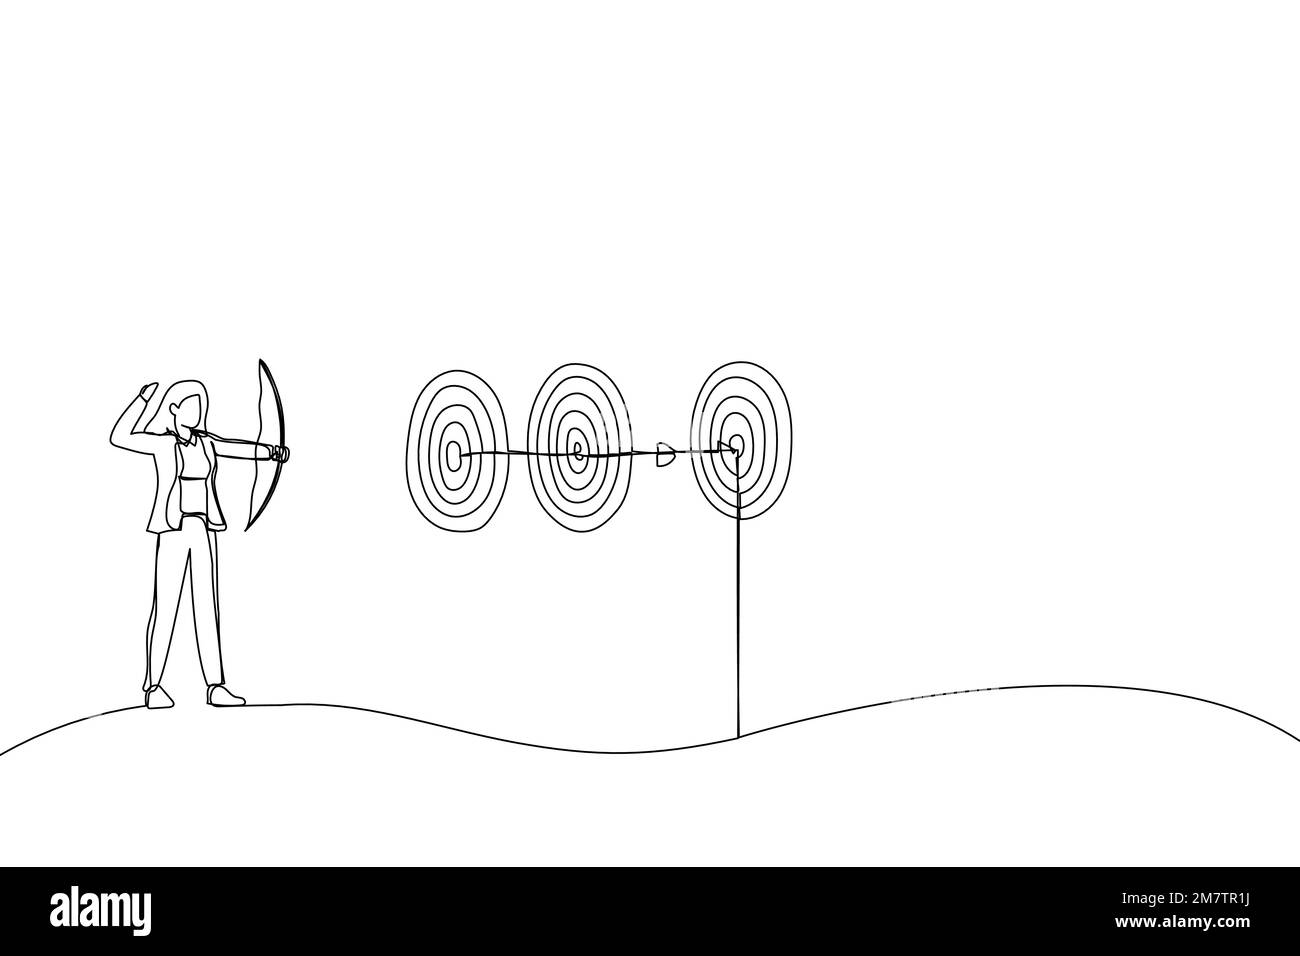 Cartoon of smart businesswoman archery hit multiple bullseye with single arrow. Metaphor for completed multiple tasks with single action. Single conti Stock Vector